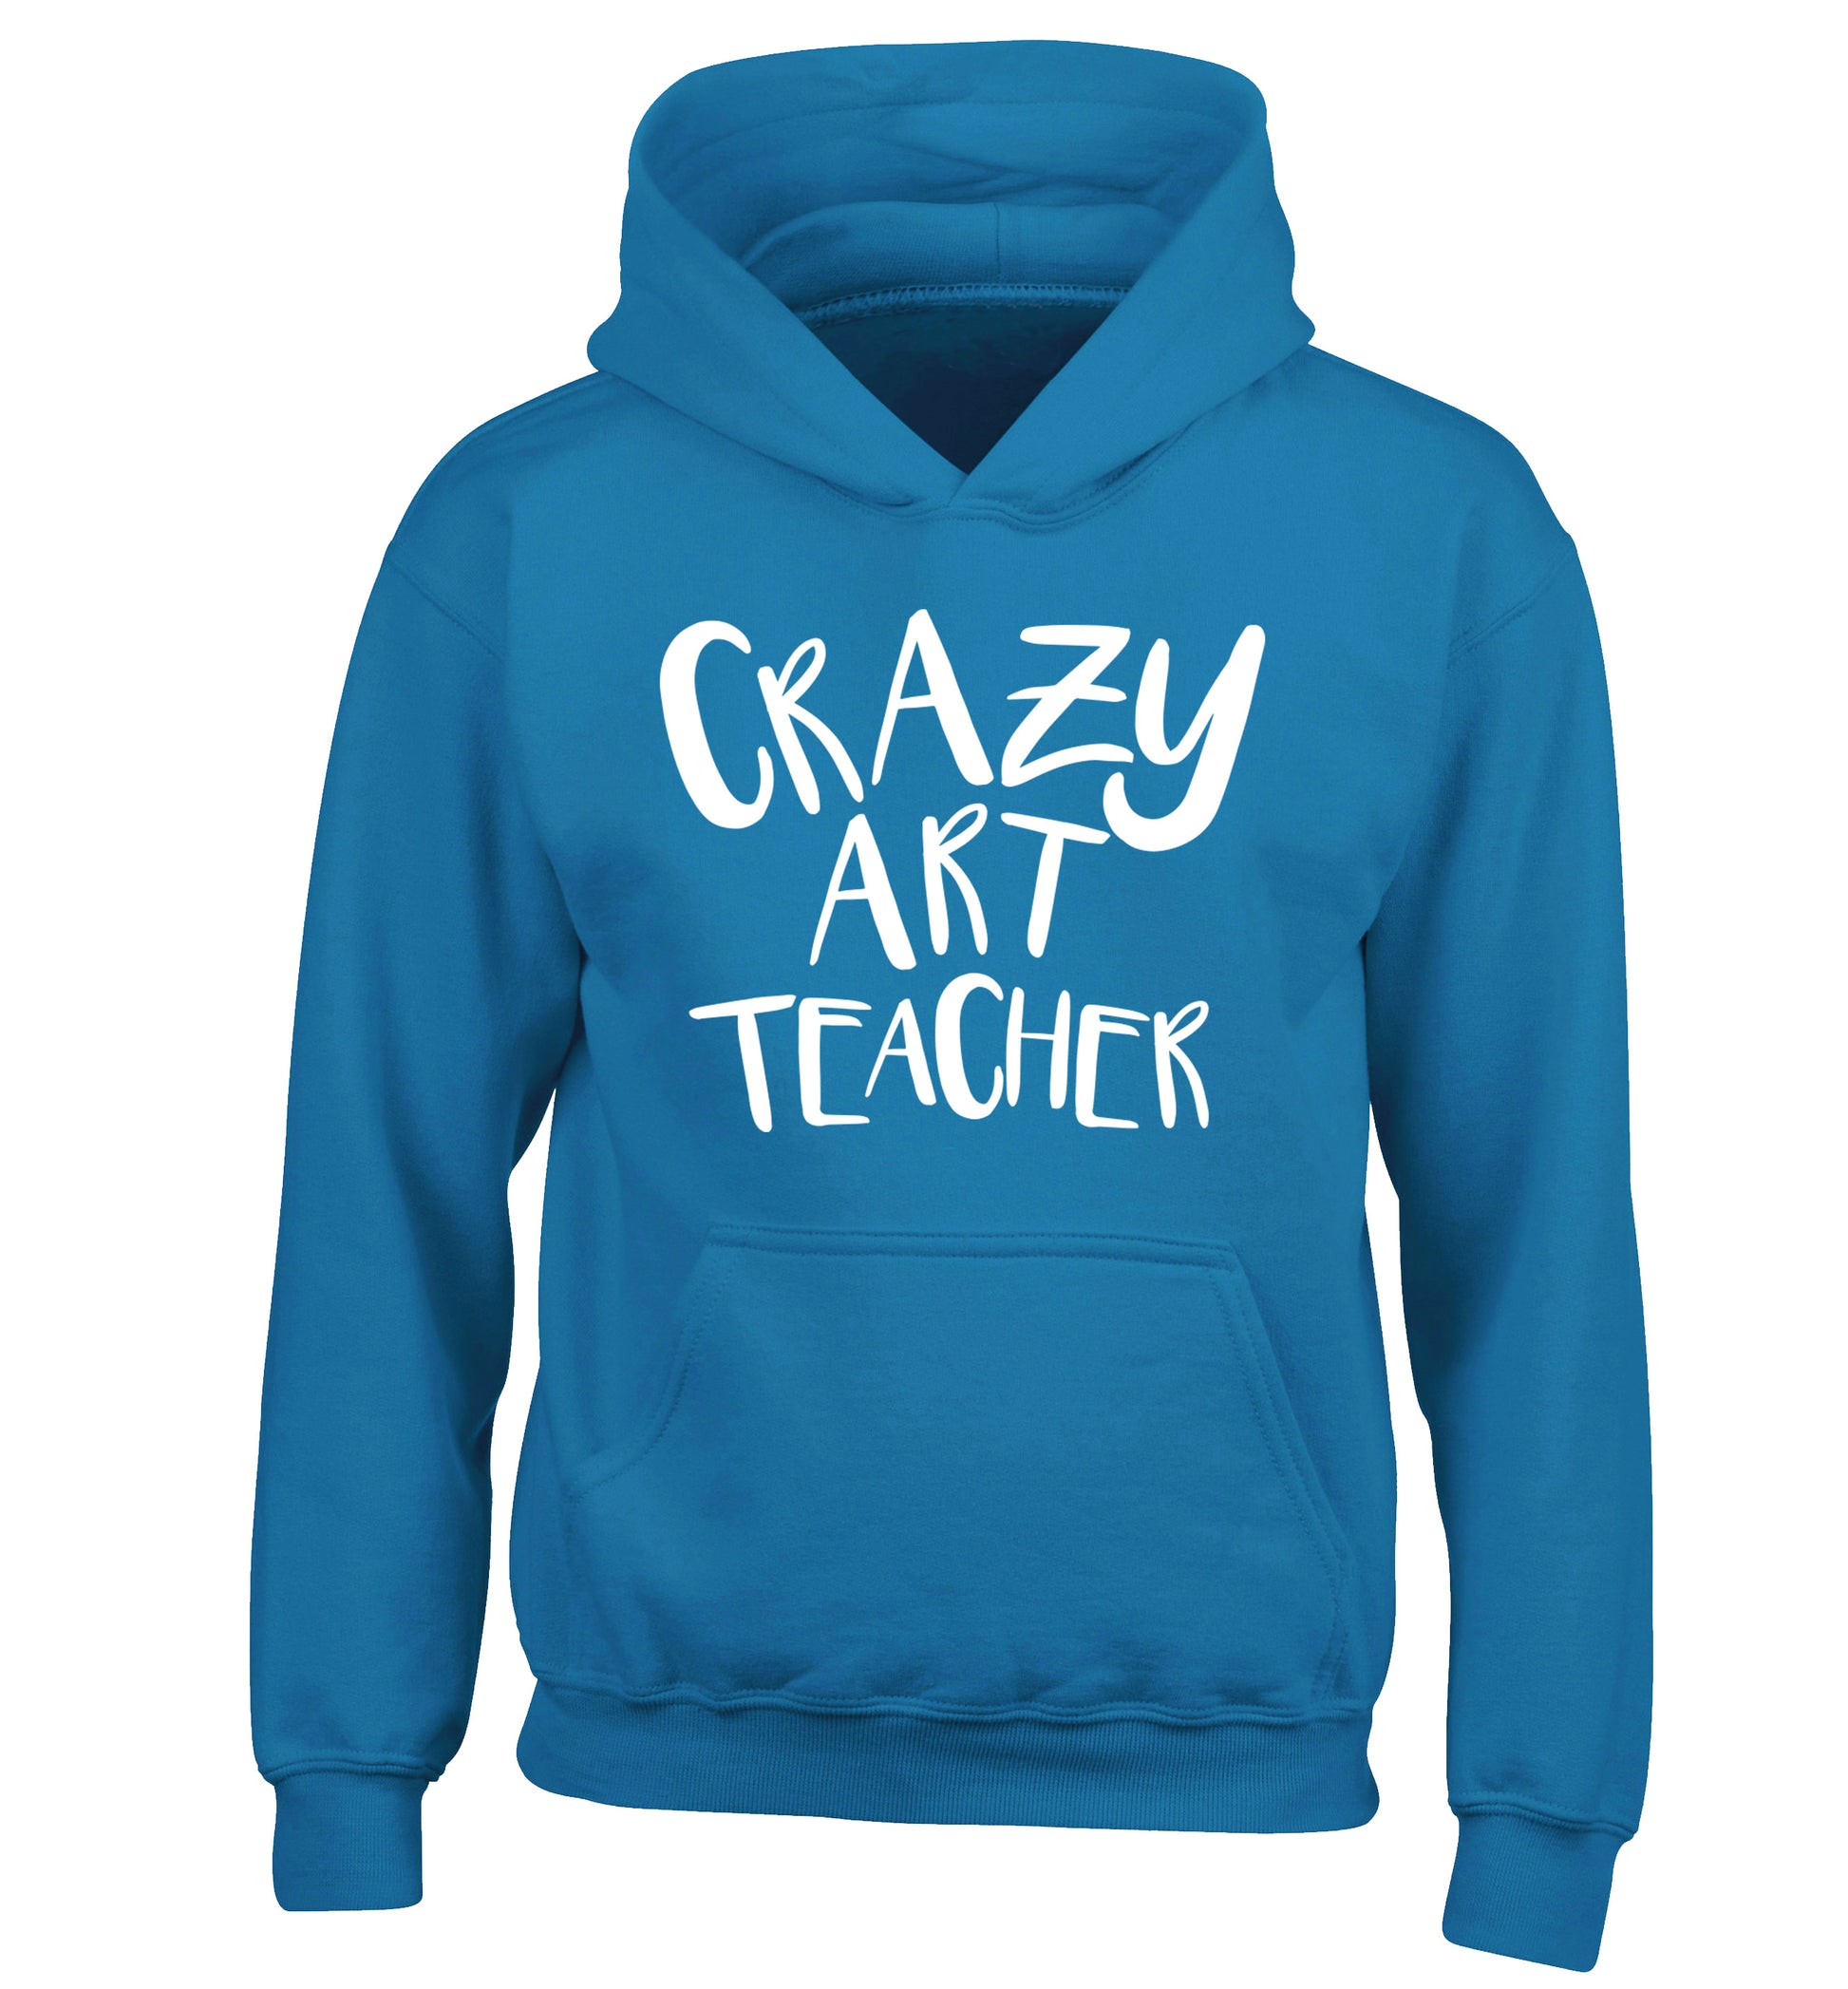 Crazy art teacher children's blue hoodie 12-13 Years